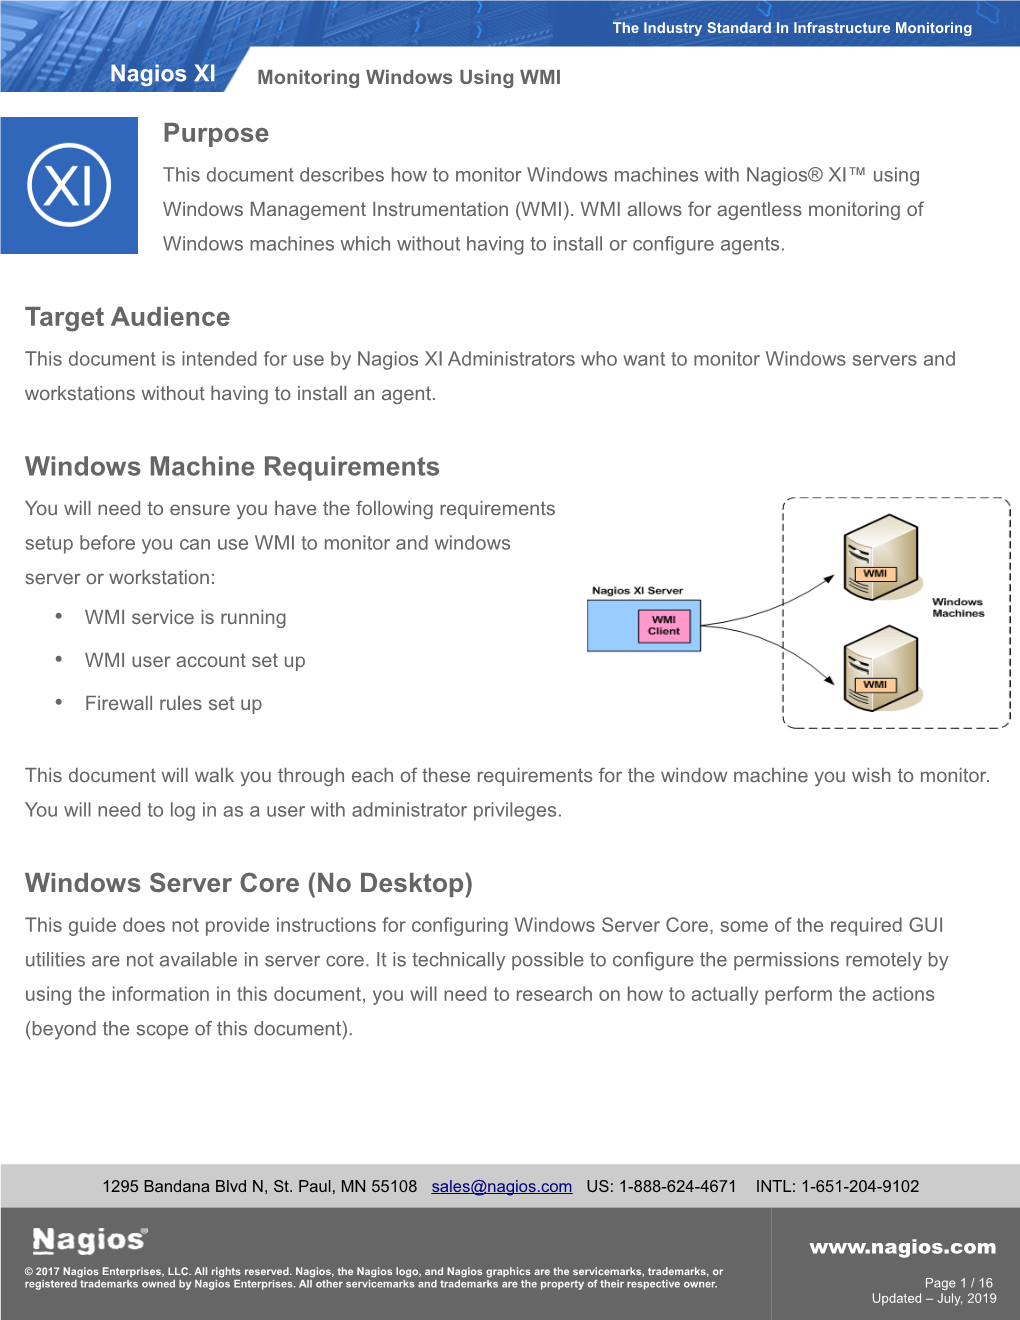 Monitoring Windows Machines with WMI and Nagios XI